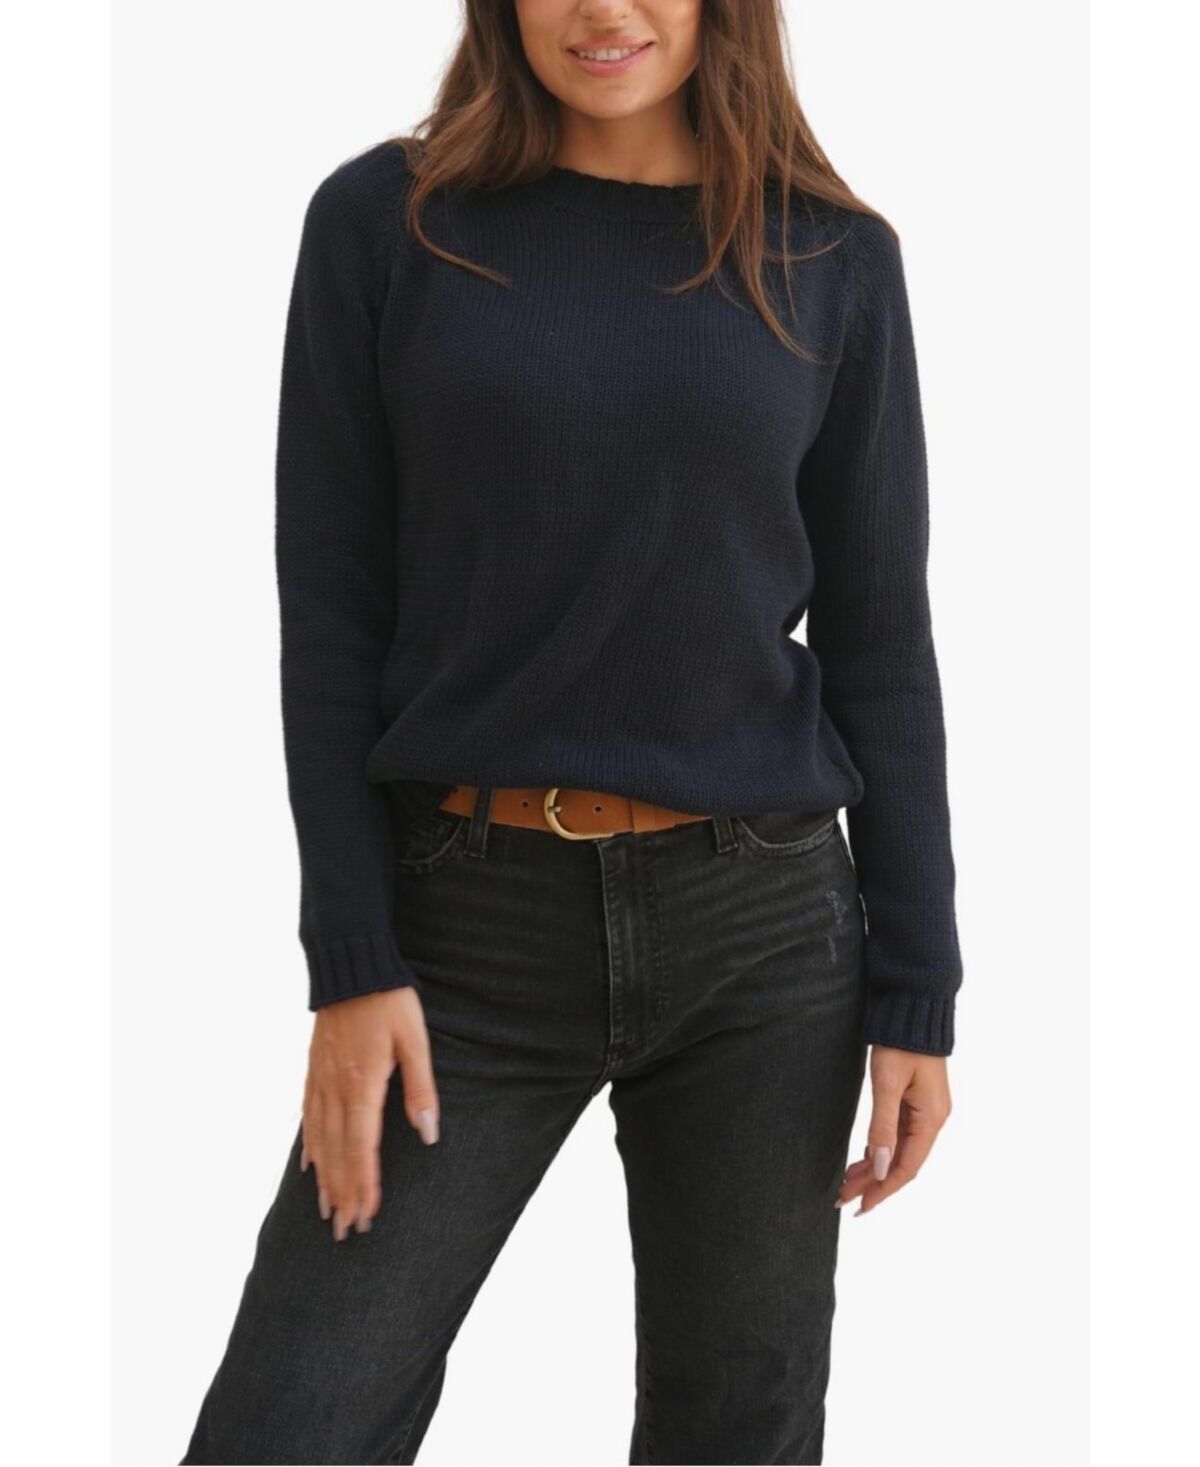 Paneros Clothing Women's Cotton Sloane Crewneck Pullover Sweater - Midnight navy